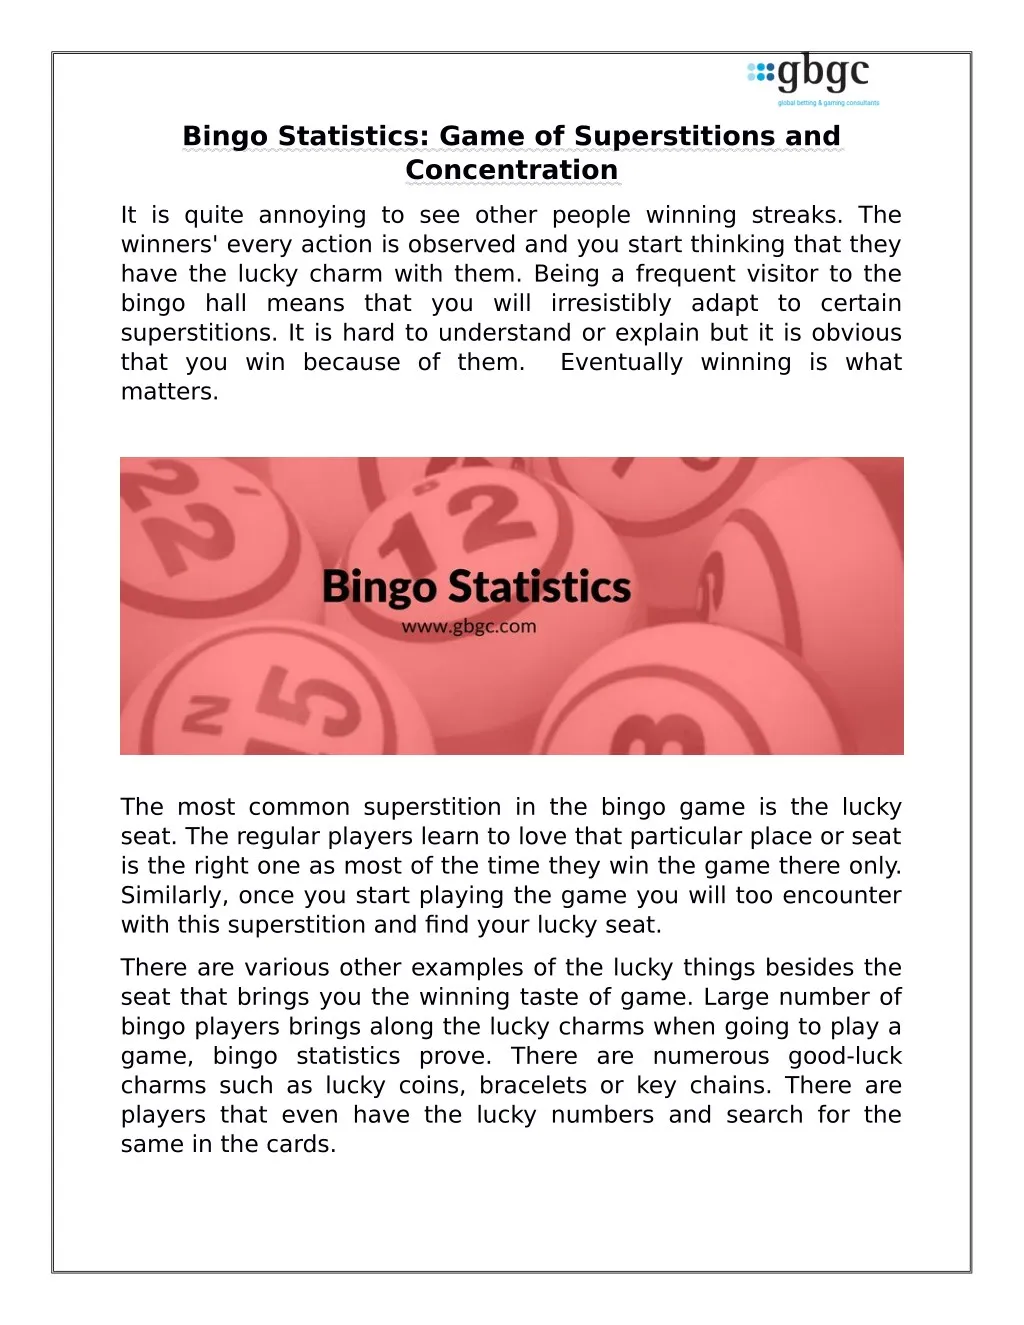 bingo statistics game of superstitions